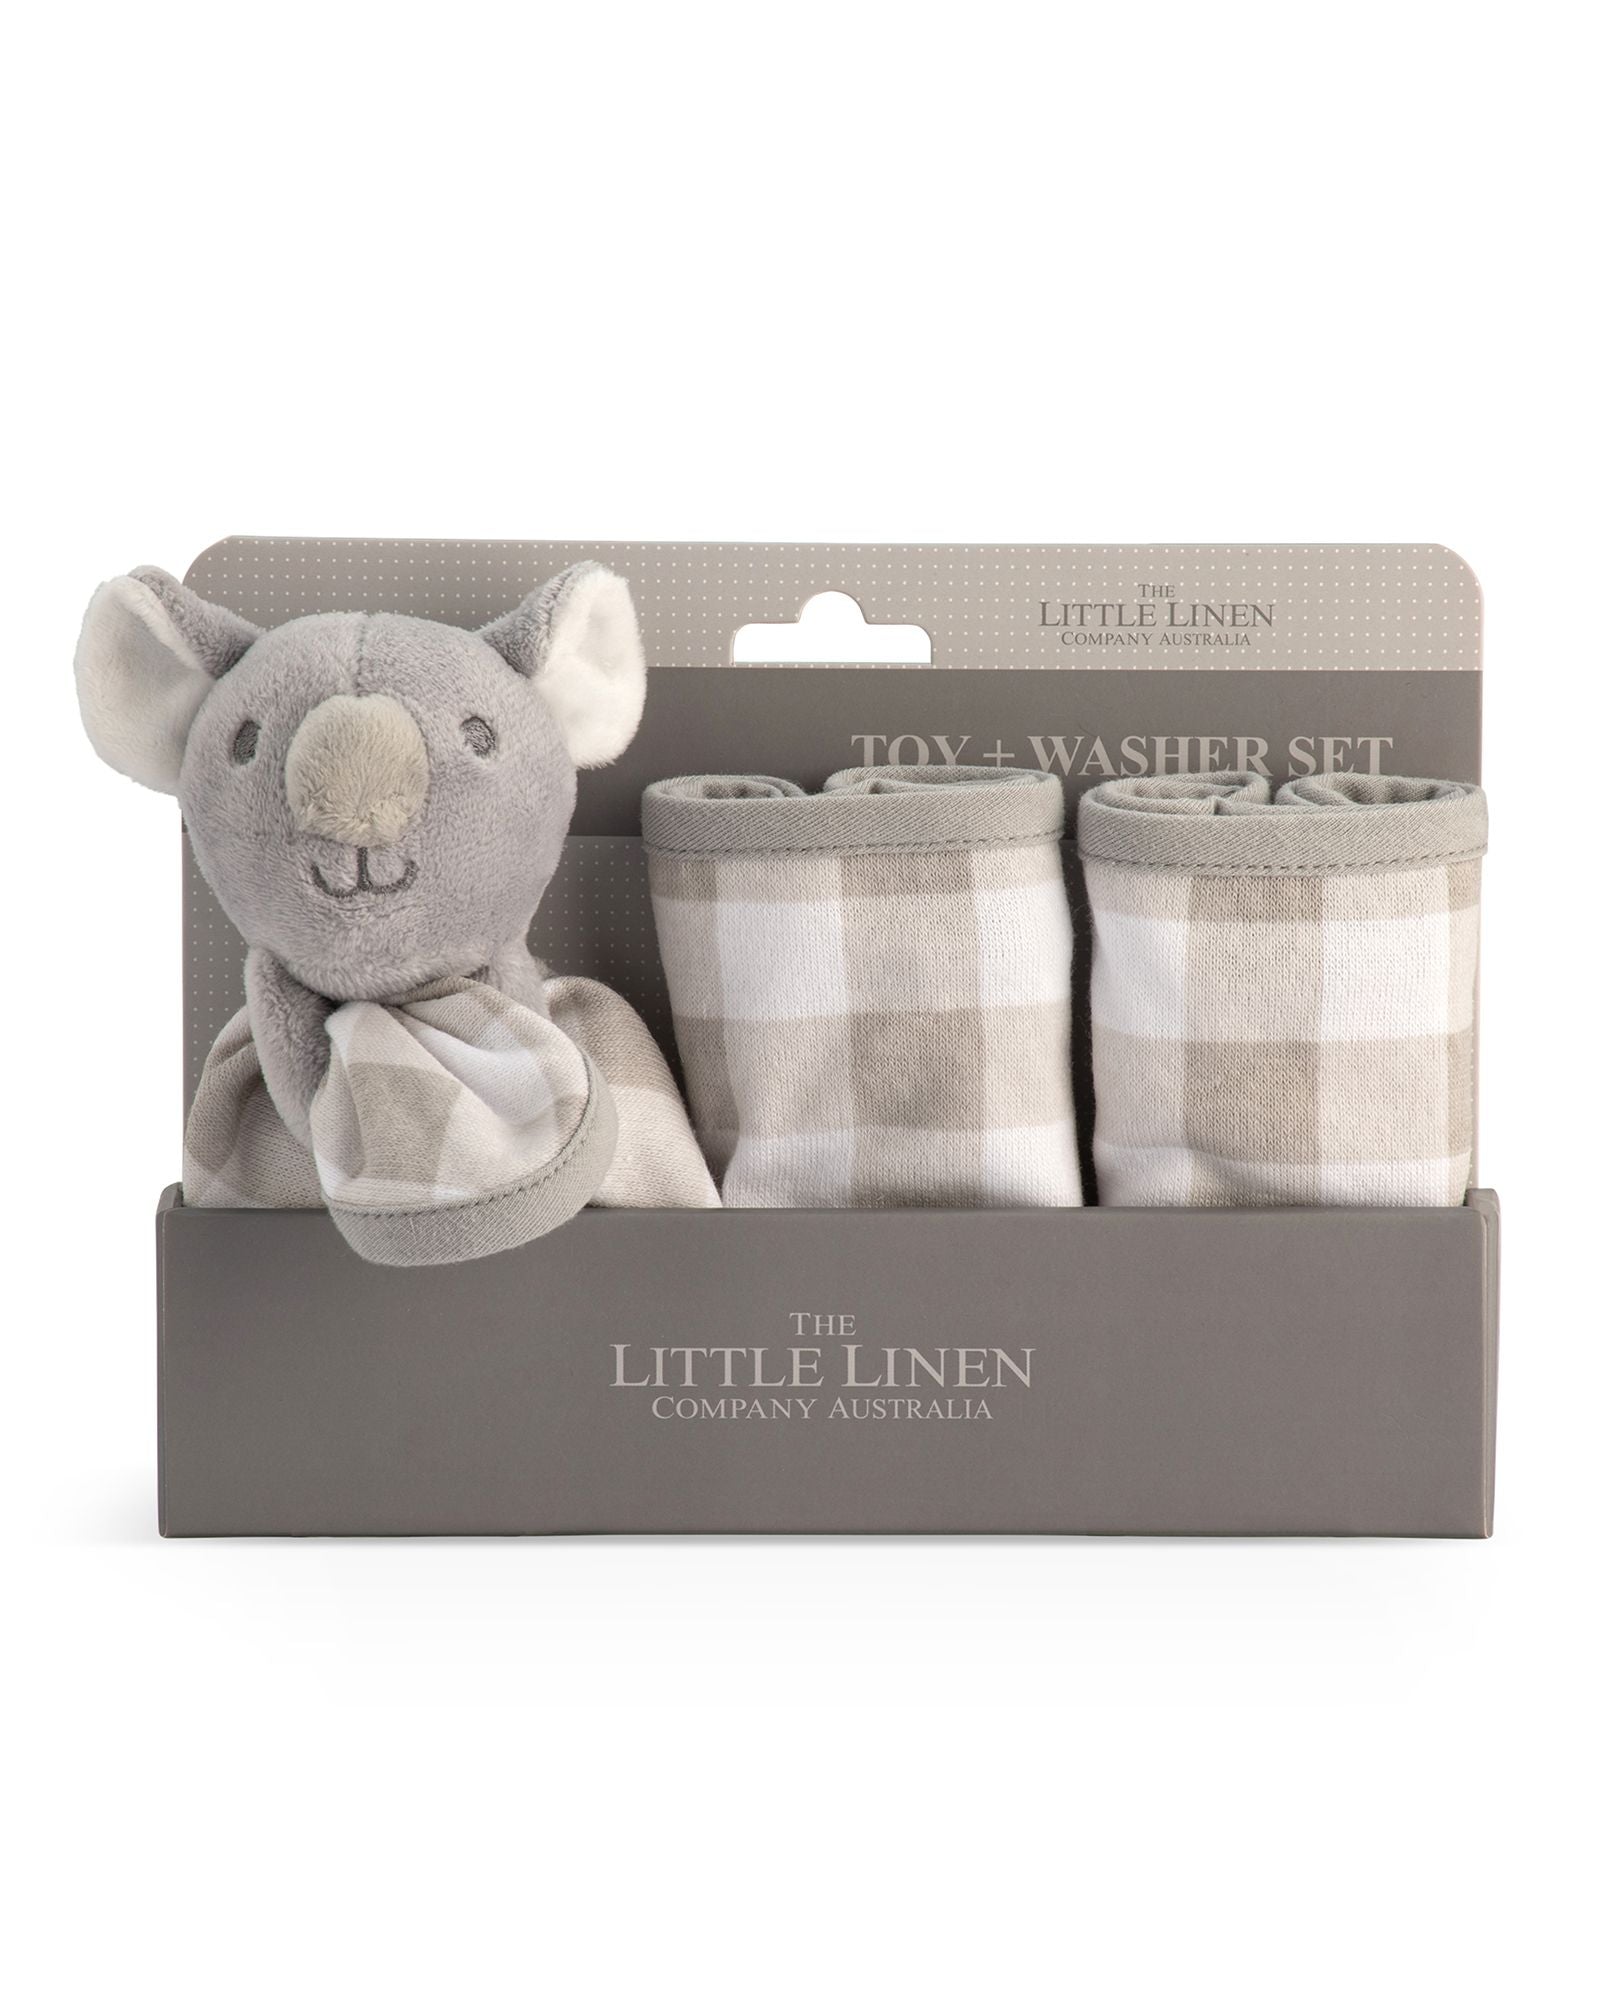 Little Linen Washer & Toy Set